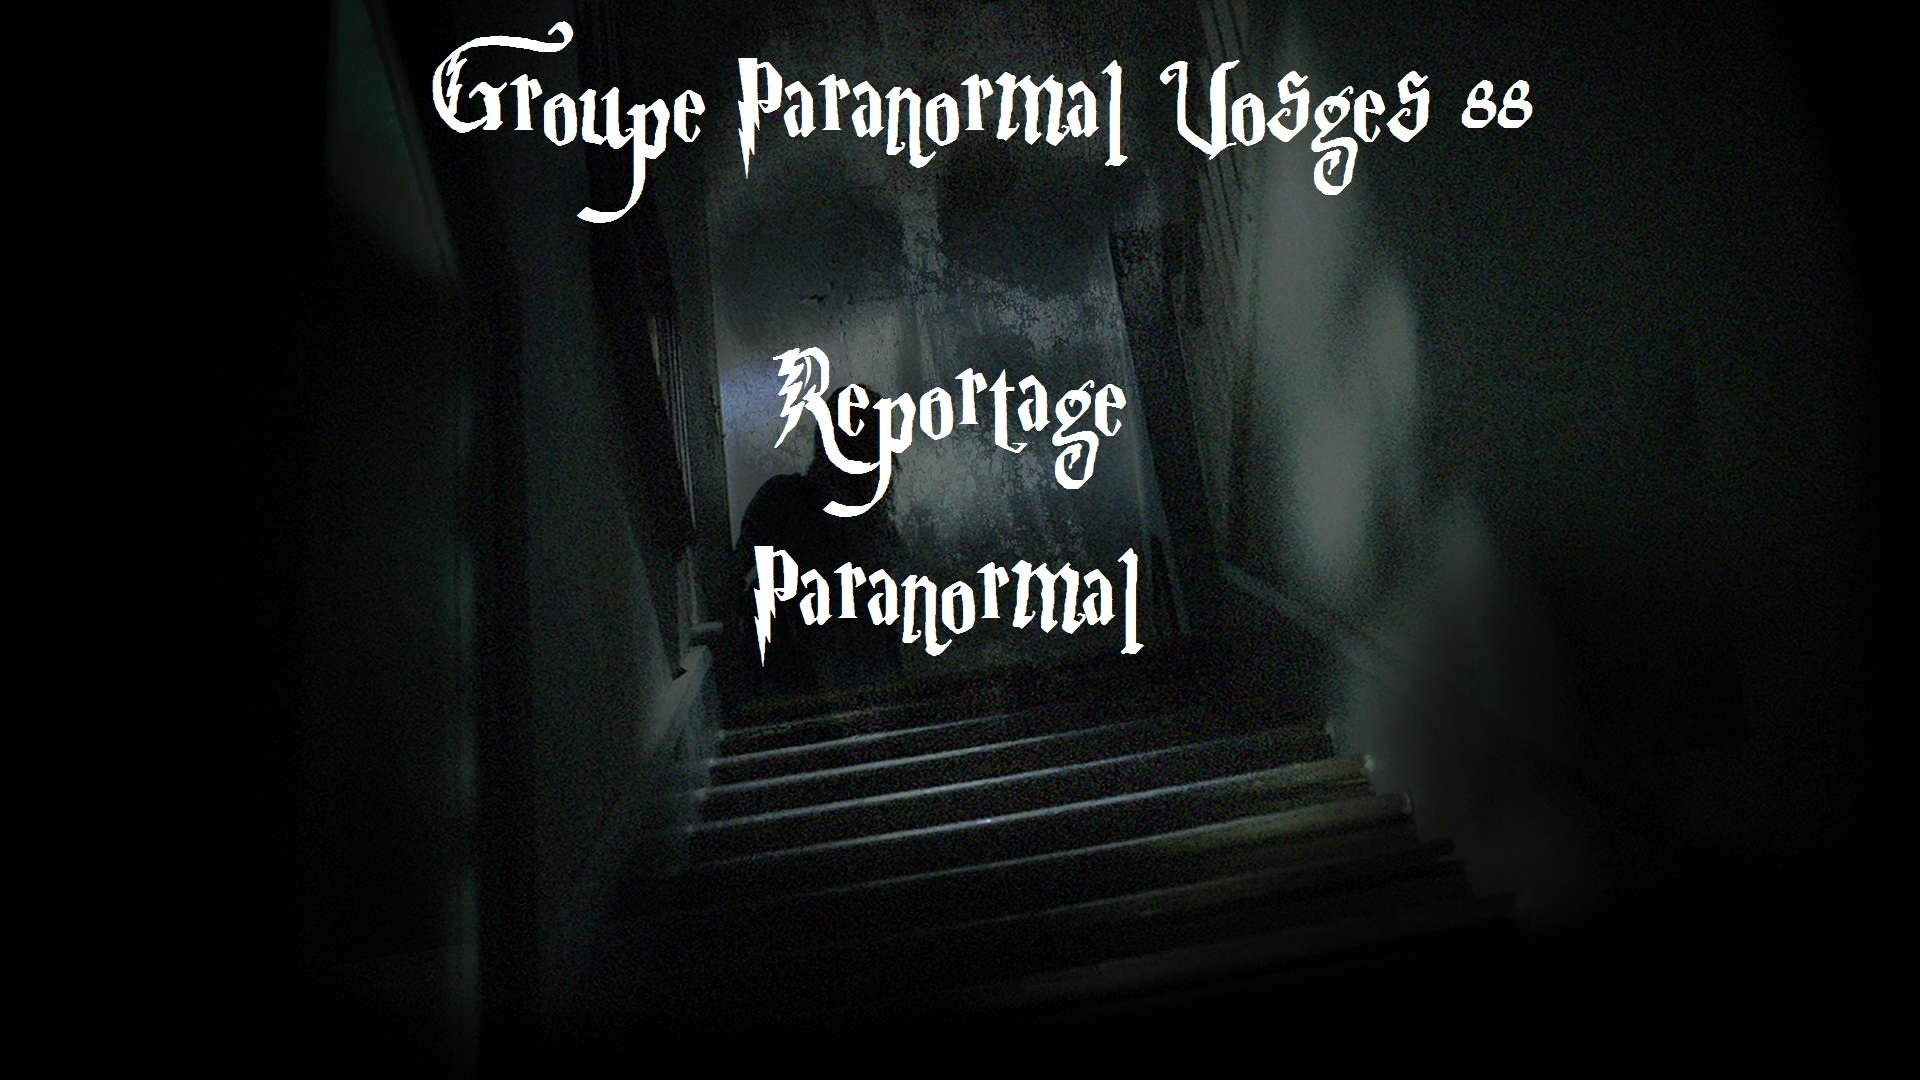 Paranormalwitness keyart show tile 1920x1080